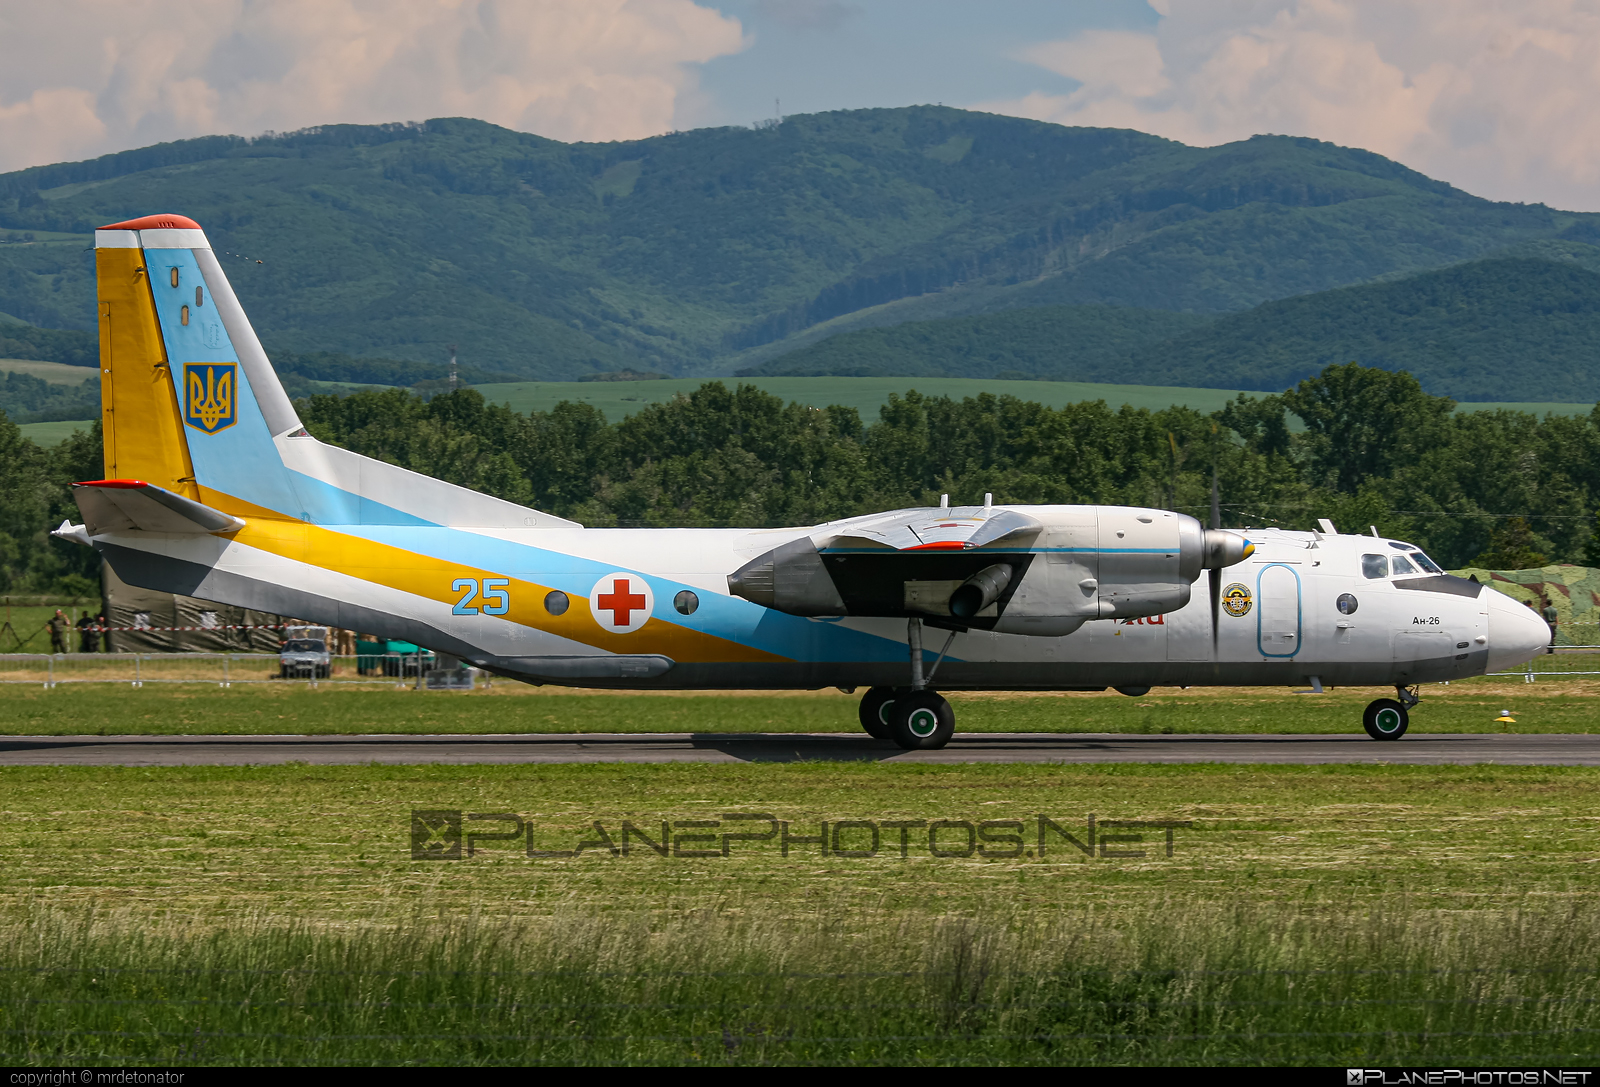 Antonov An-26 - 25 operated by Povitryani Syly Ukrayiny (Ukrainian Air Force) #an26 #antonov #antonov26 #povitryanisylyukrayiny #ukrainianairforce